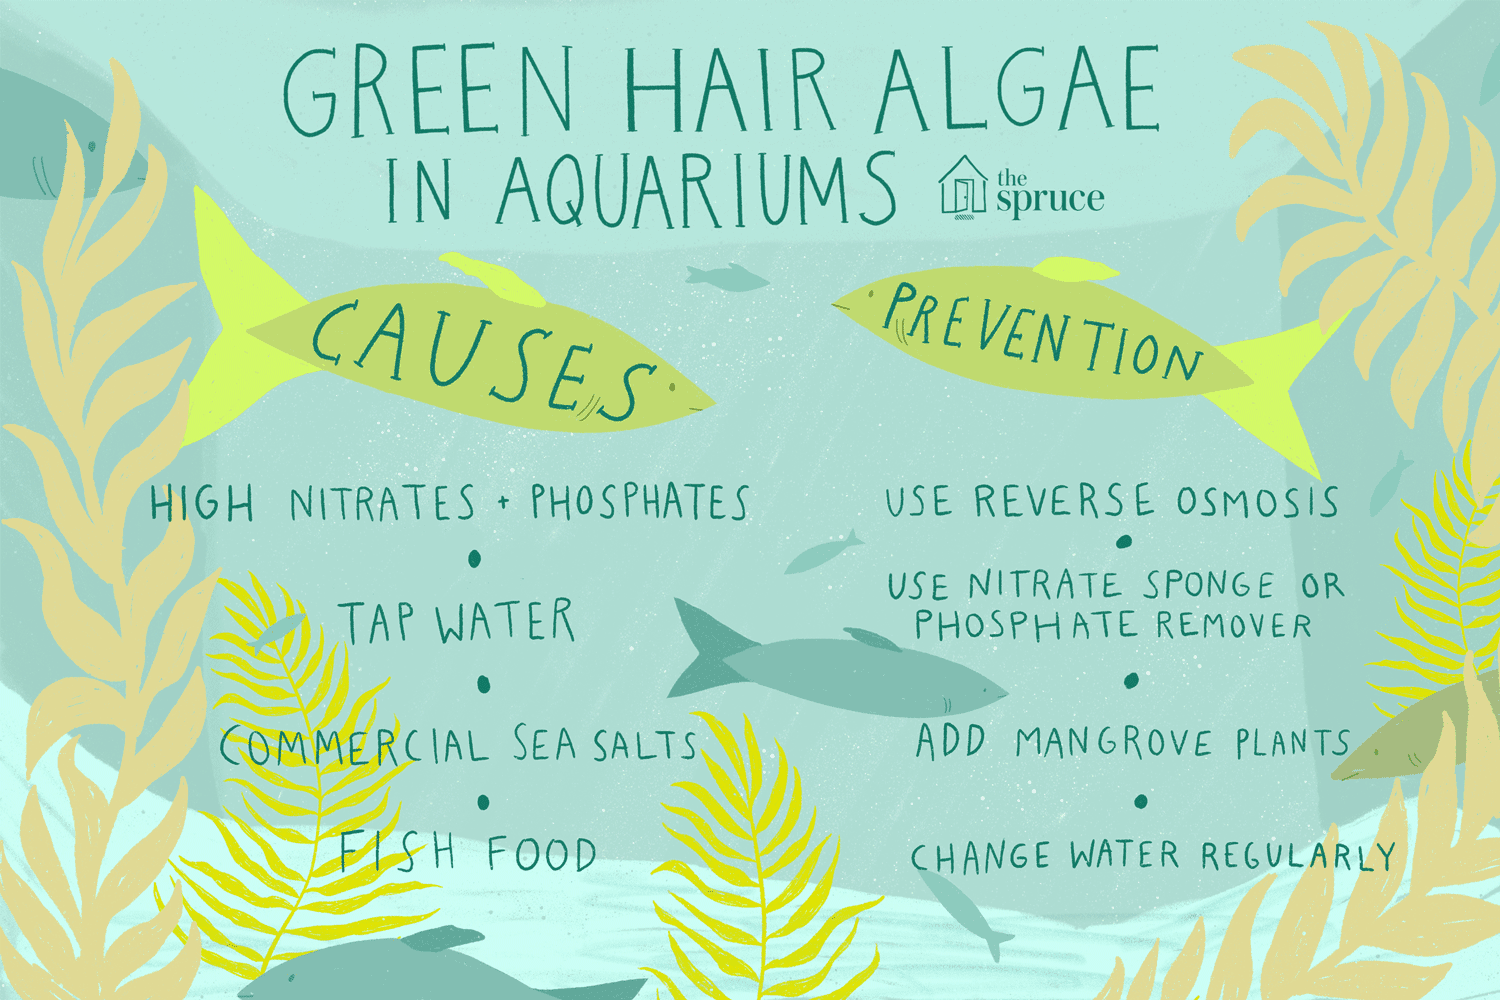 Green hair algae in aquariums: Causes and prevention